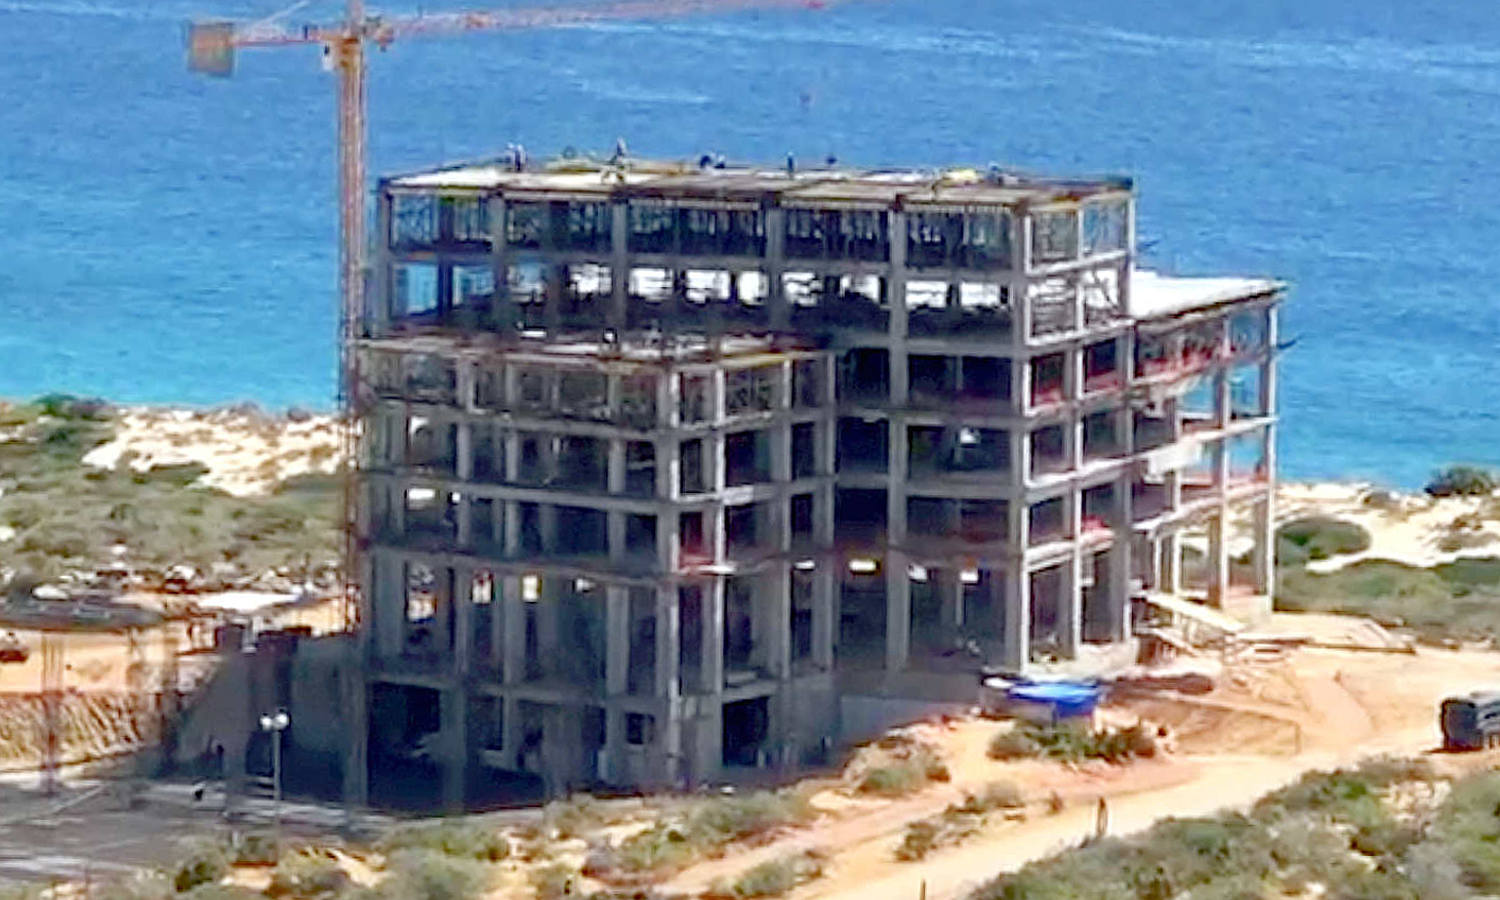 East Cape construction - February 22, 2019.